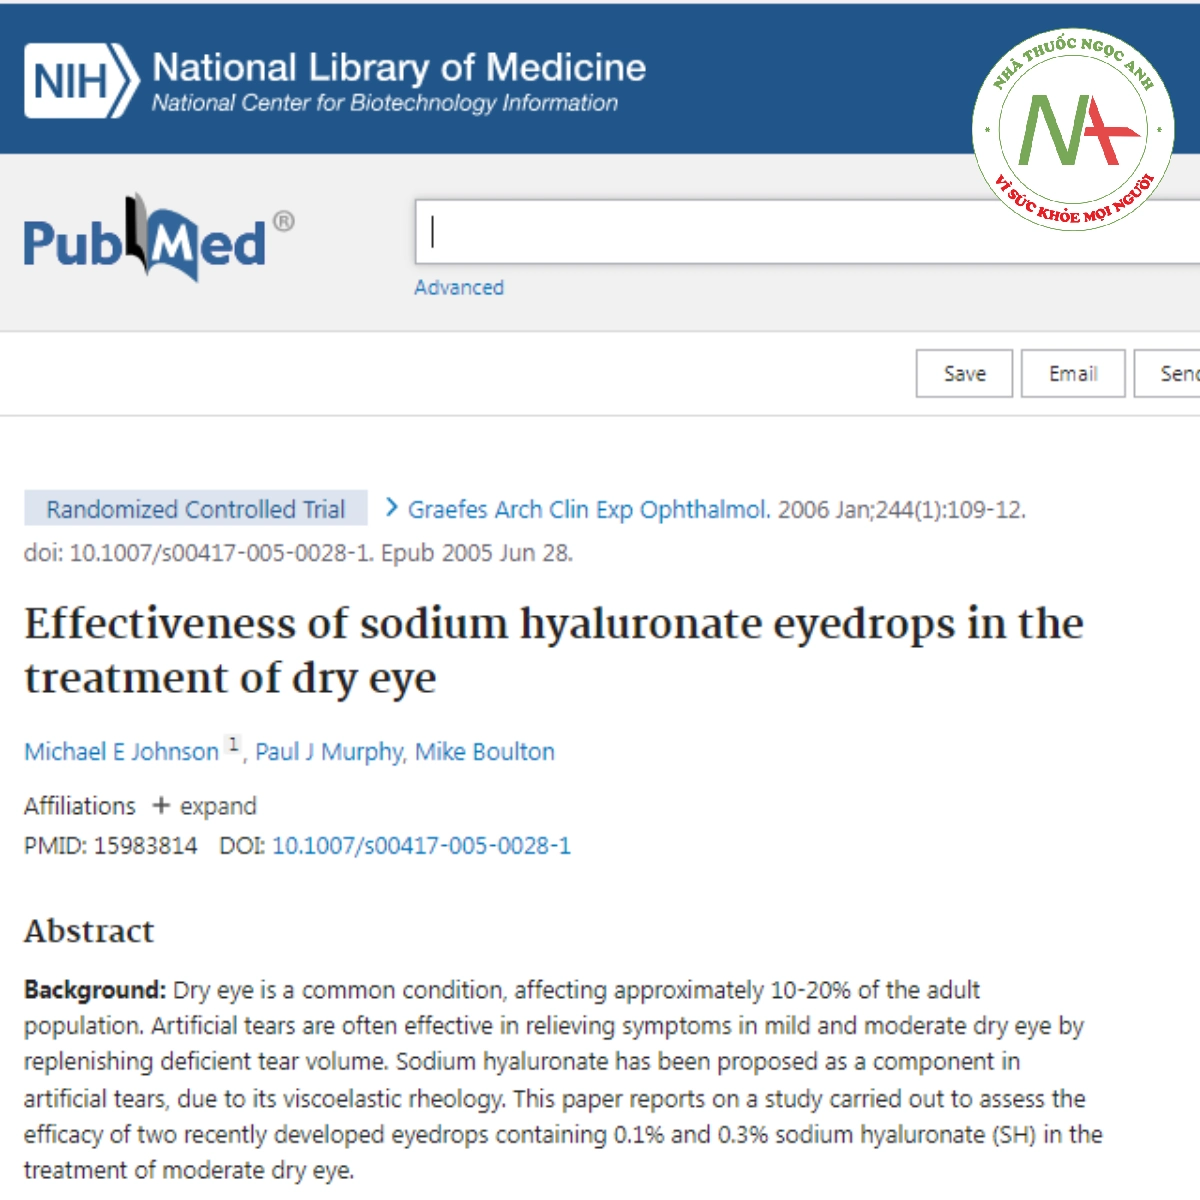 Effectiveness of sodium hyaluronate eyedrops in the treatment of dry eye